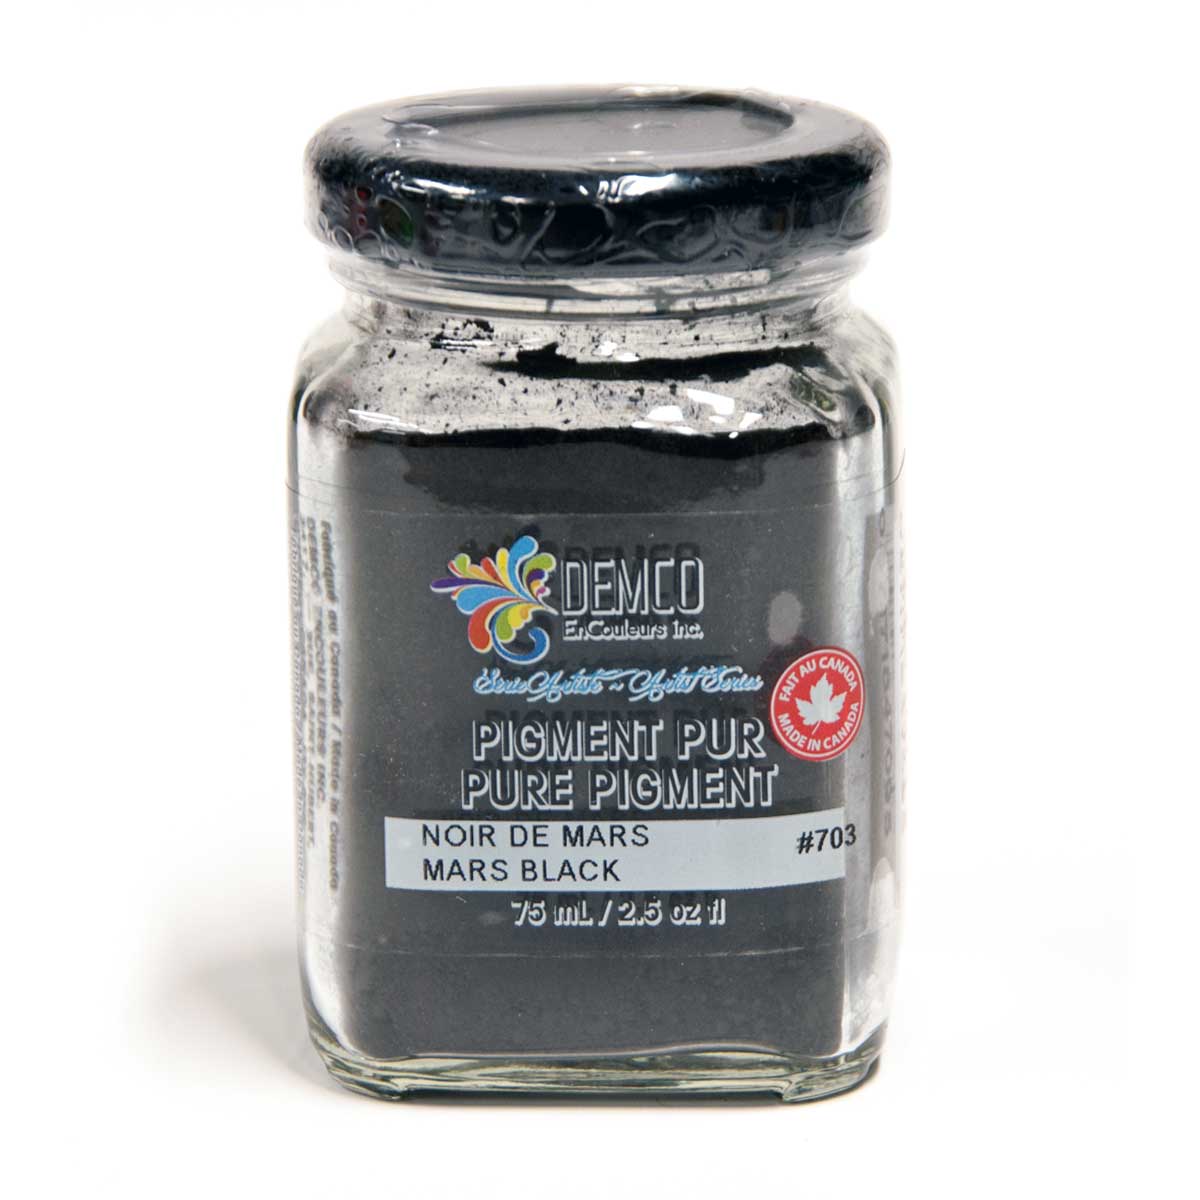 Demco Pure Pigment Artist Series 1 - Mars Black 75 ml